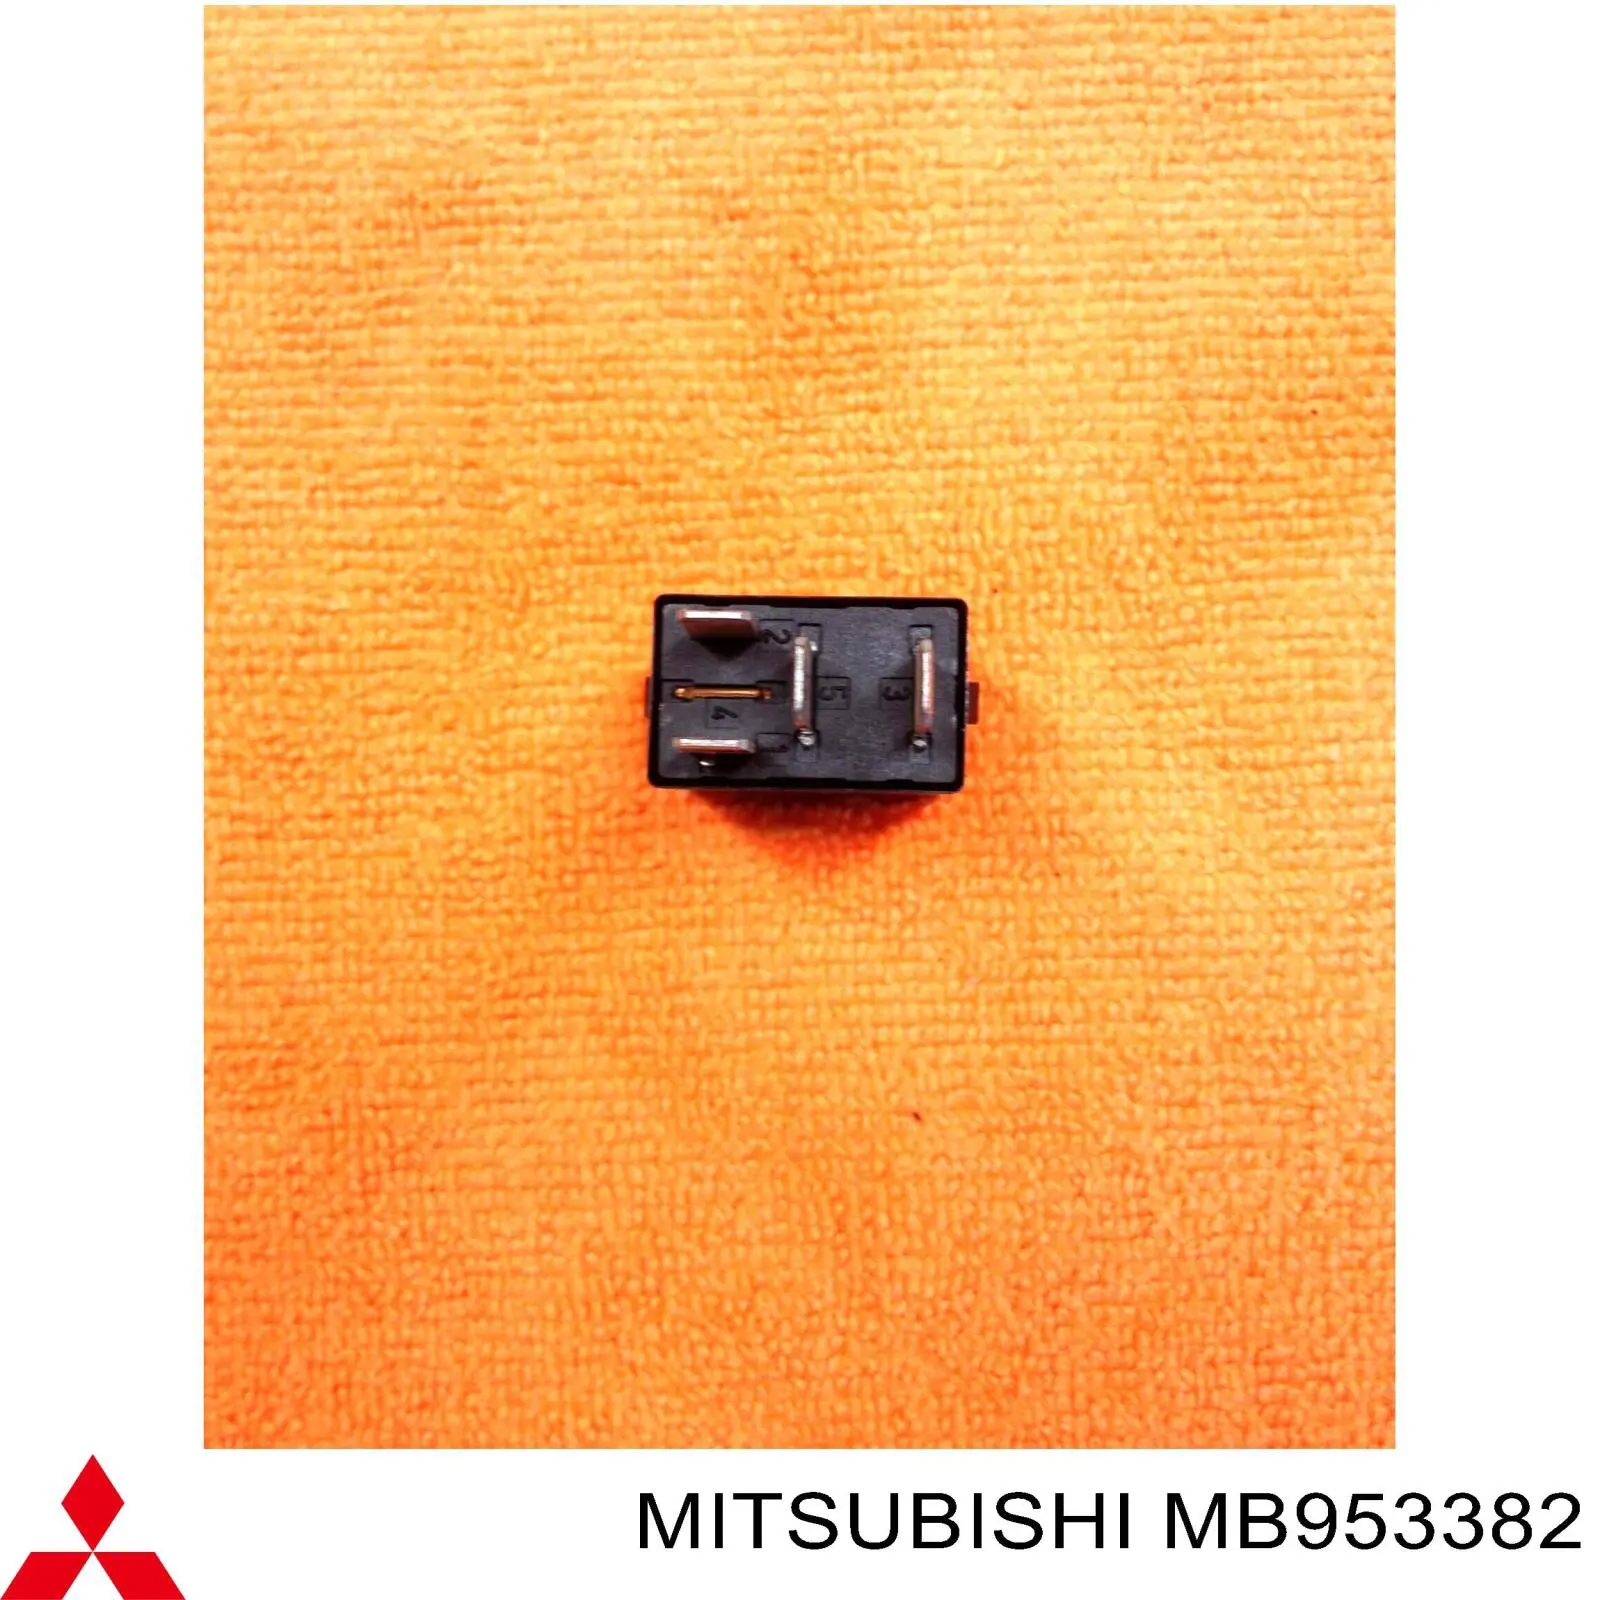 MB953382 Mitsubishi relé, faro